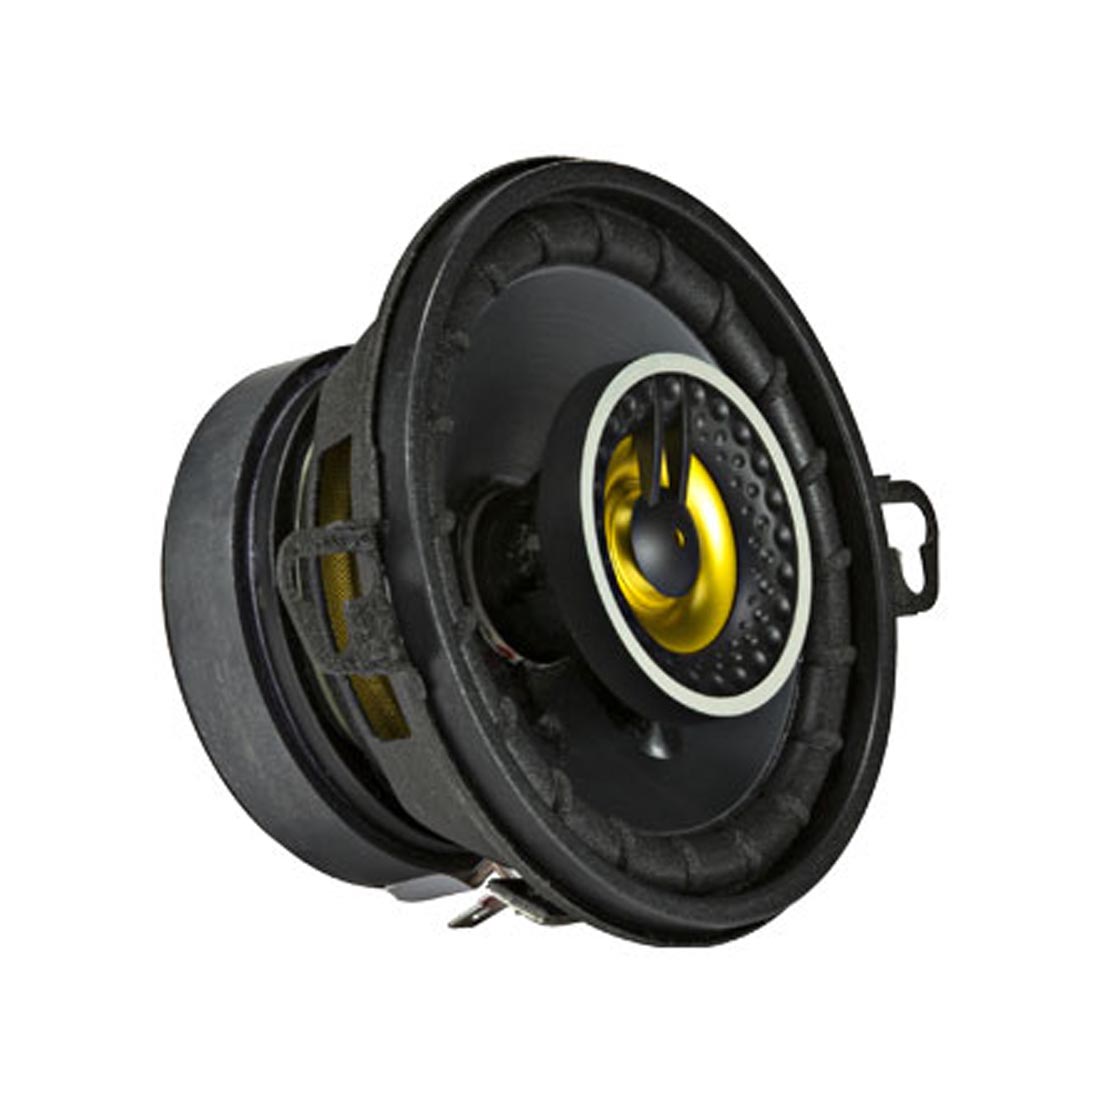 Kicker 46CSC354 CS Series 3.5″ 4-Ohm 2-Way Coaxial Car Speakers